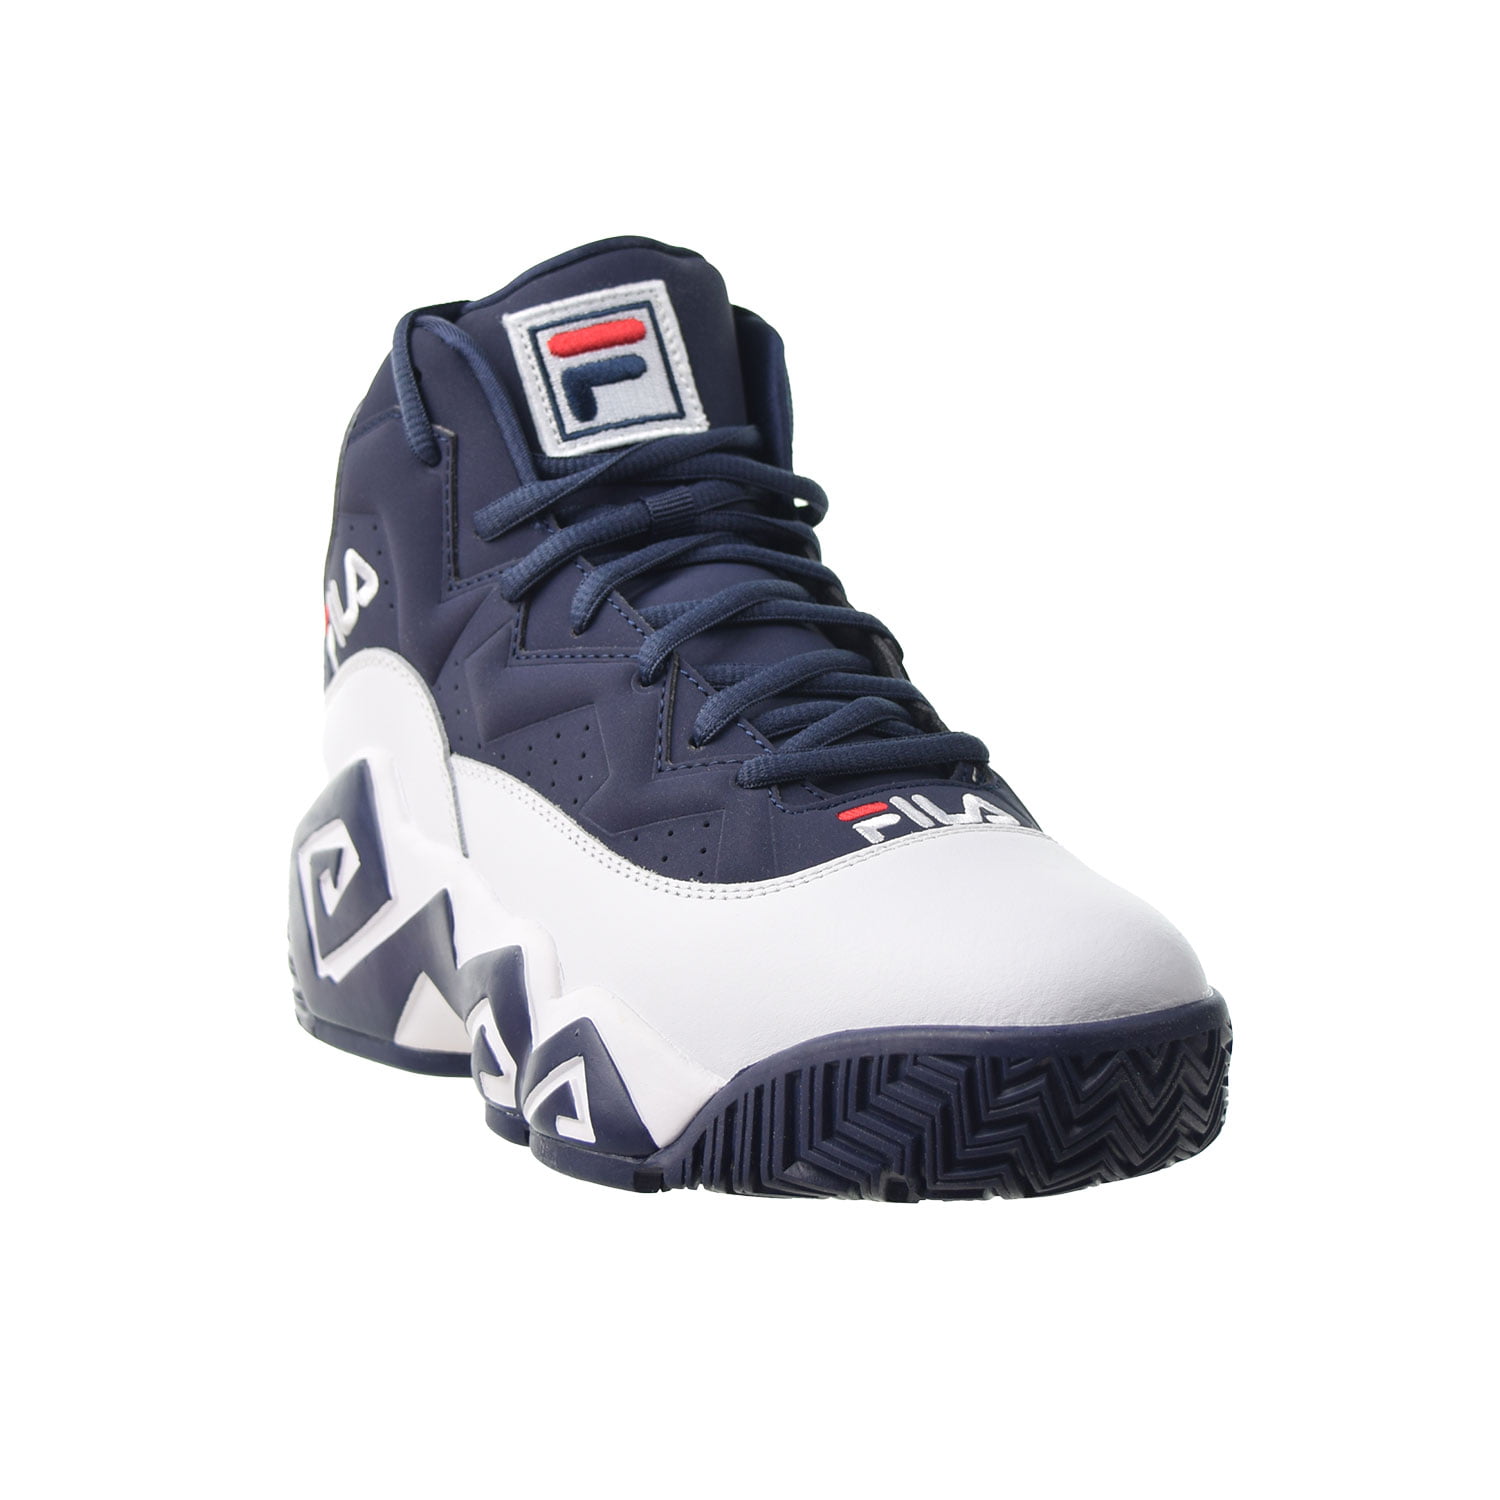 Fila Men's MB Jamal Mashburn Retro Basketball Shoes 1BM01078-055 US 12 M